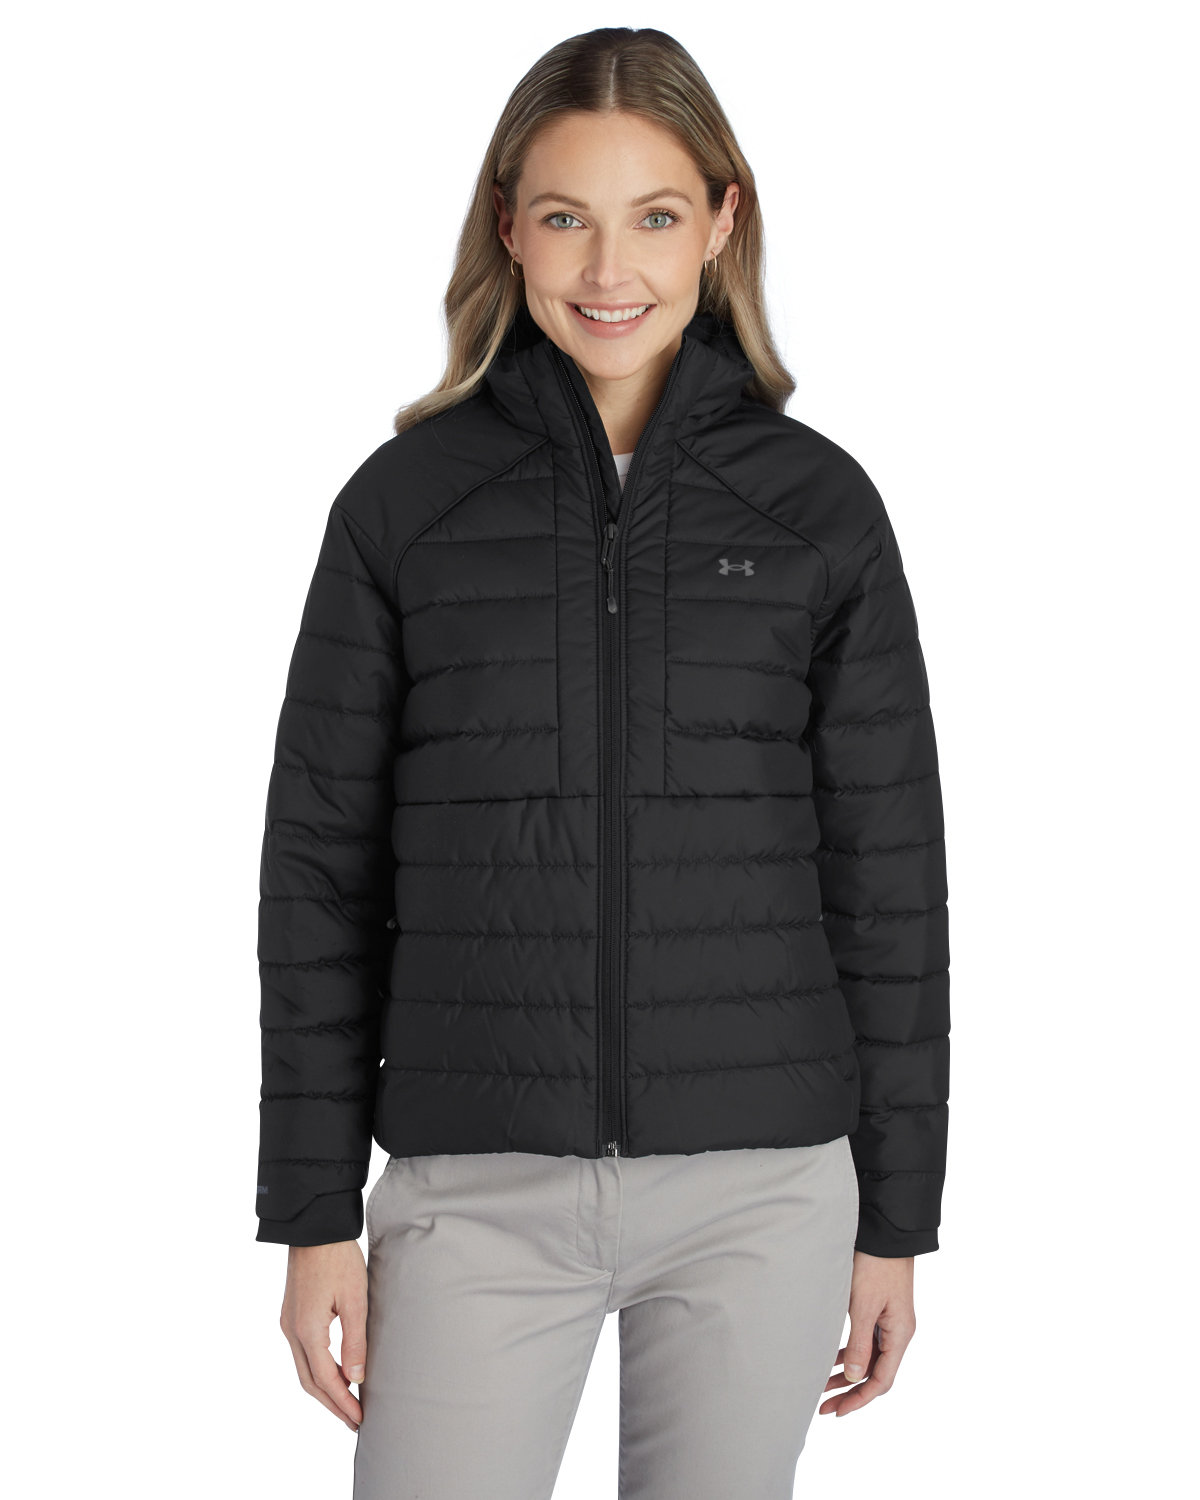 Buy Ladies Storm Insulate Jacket - Under Armour Online at Best price - AZ